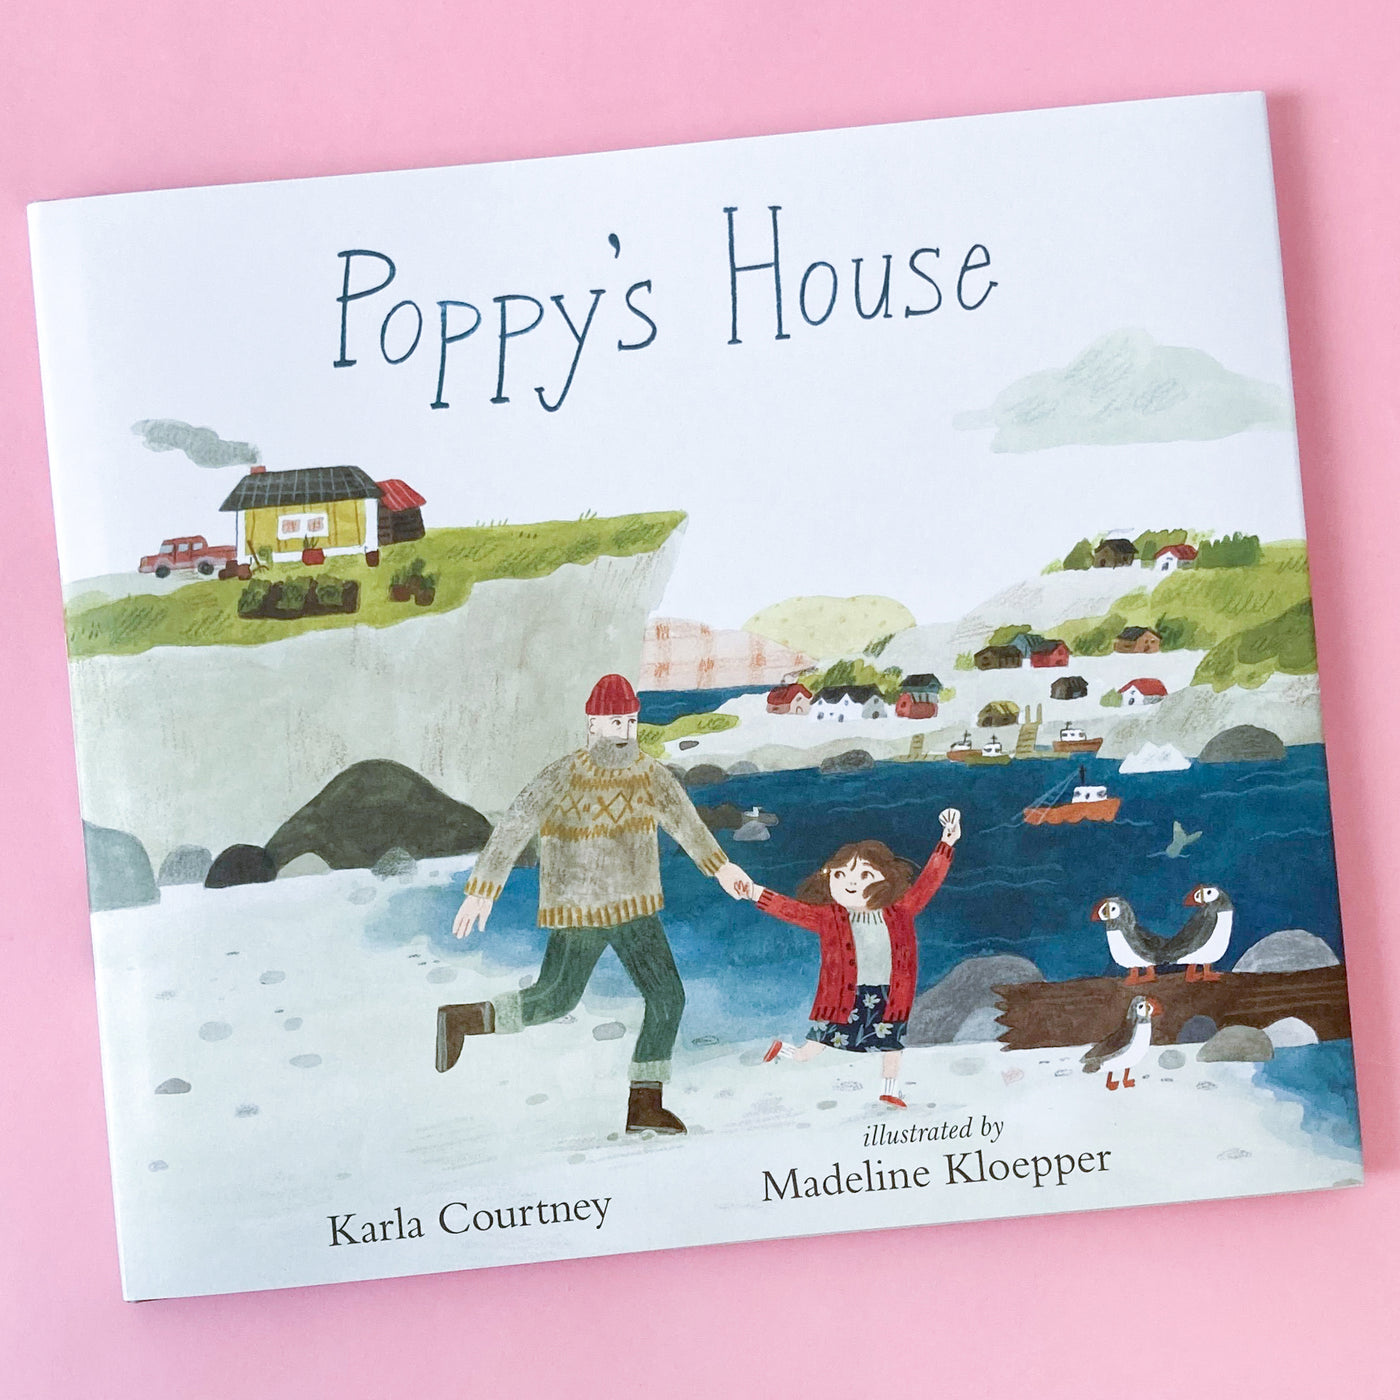 Poppy's House by Karla Courtney and Madeline Kloepper